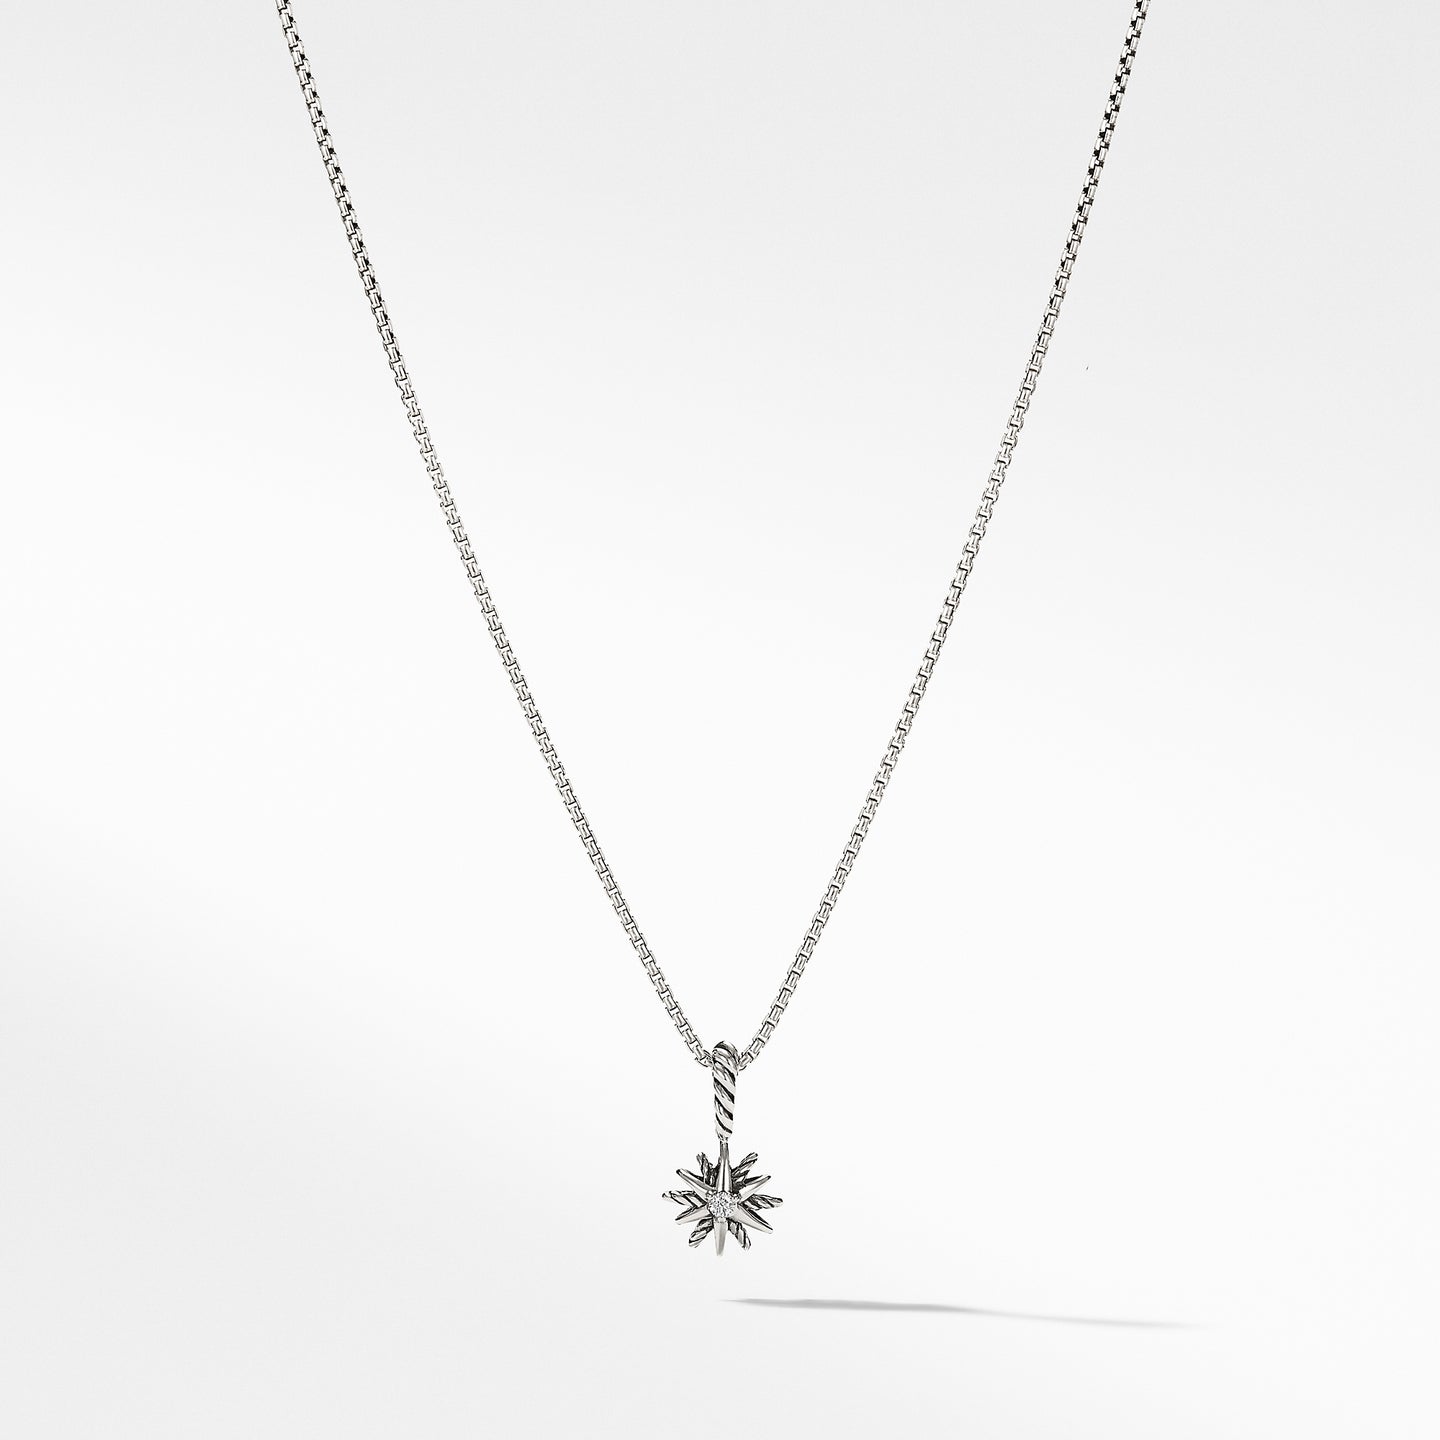 Starburst Kids Necklace with Diamonds, 8mm, 14